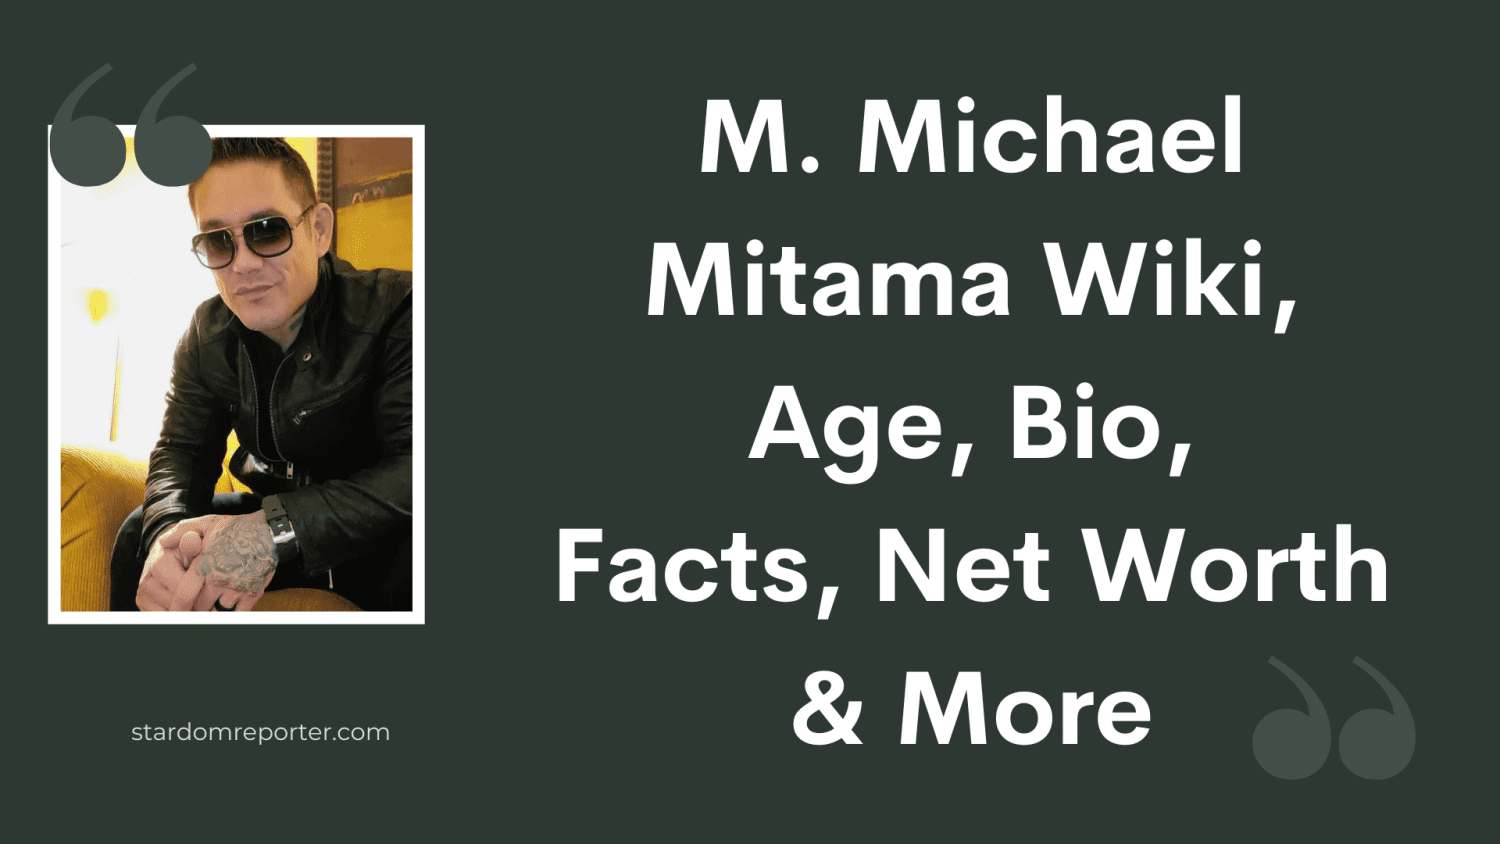 M. Michael Mitama Wiki, Age, Bio, Facts, Net Worth & More - 11